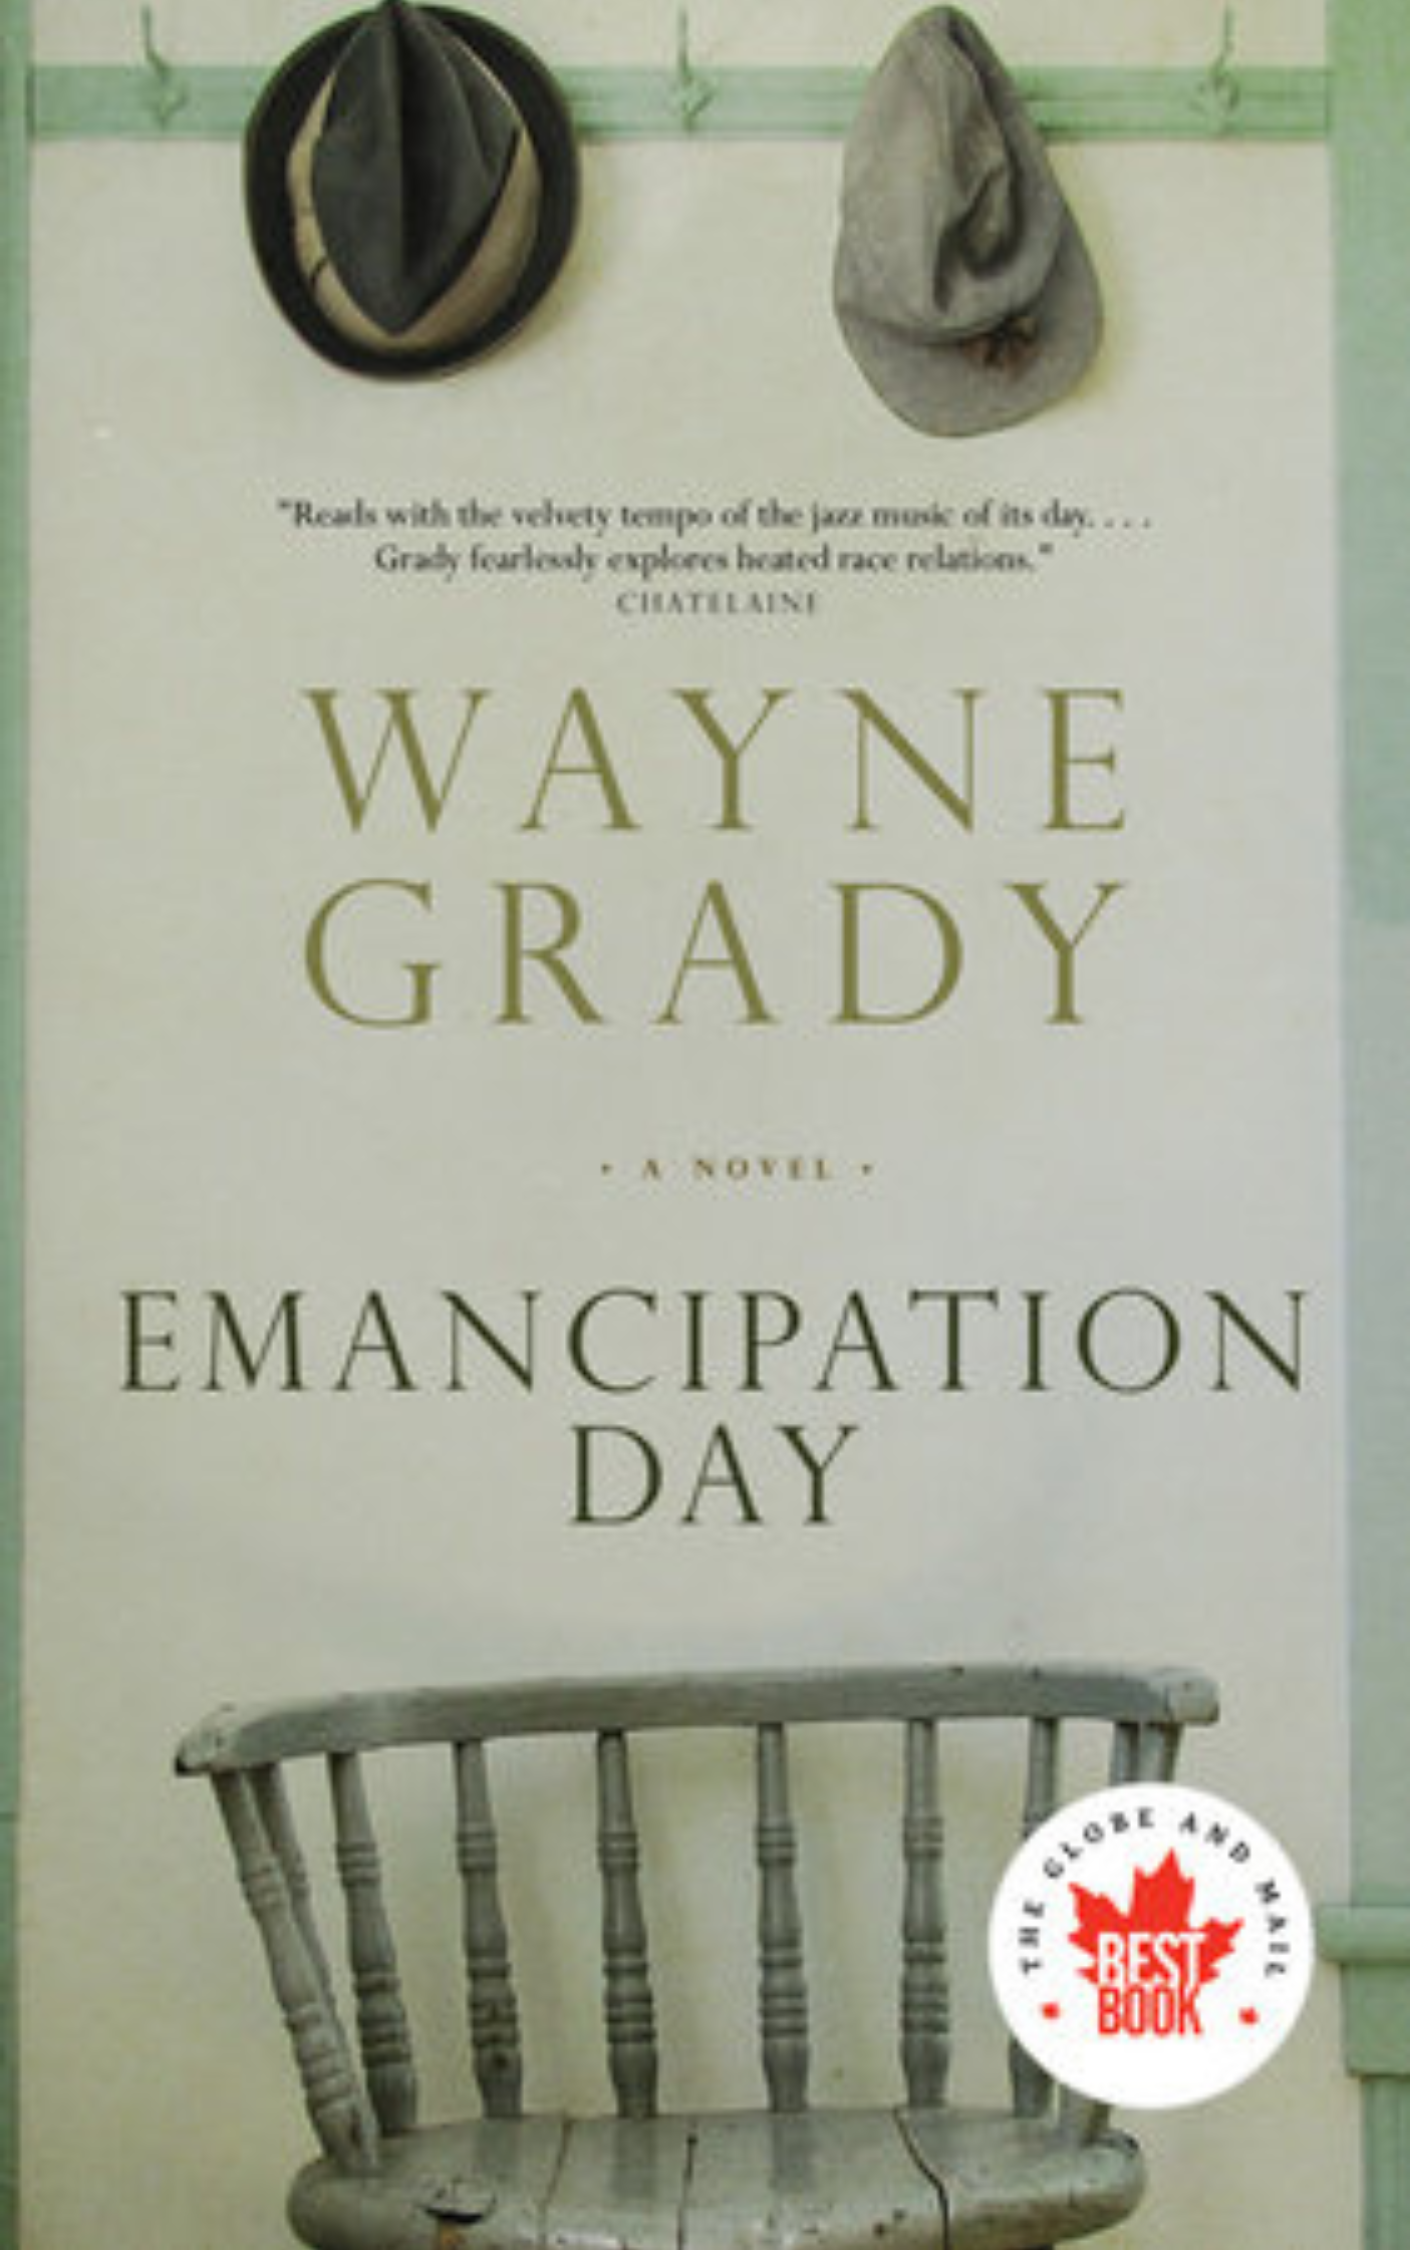 Emancipation Day by Wayne Grady